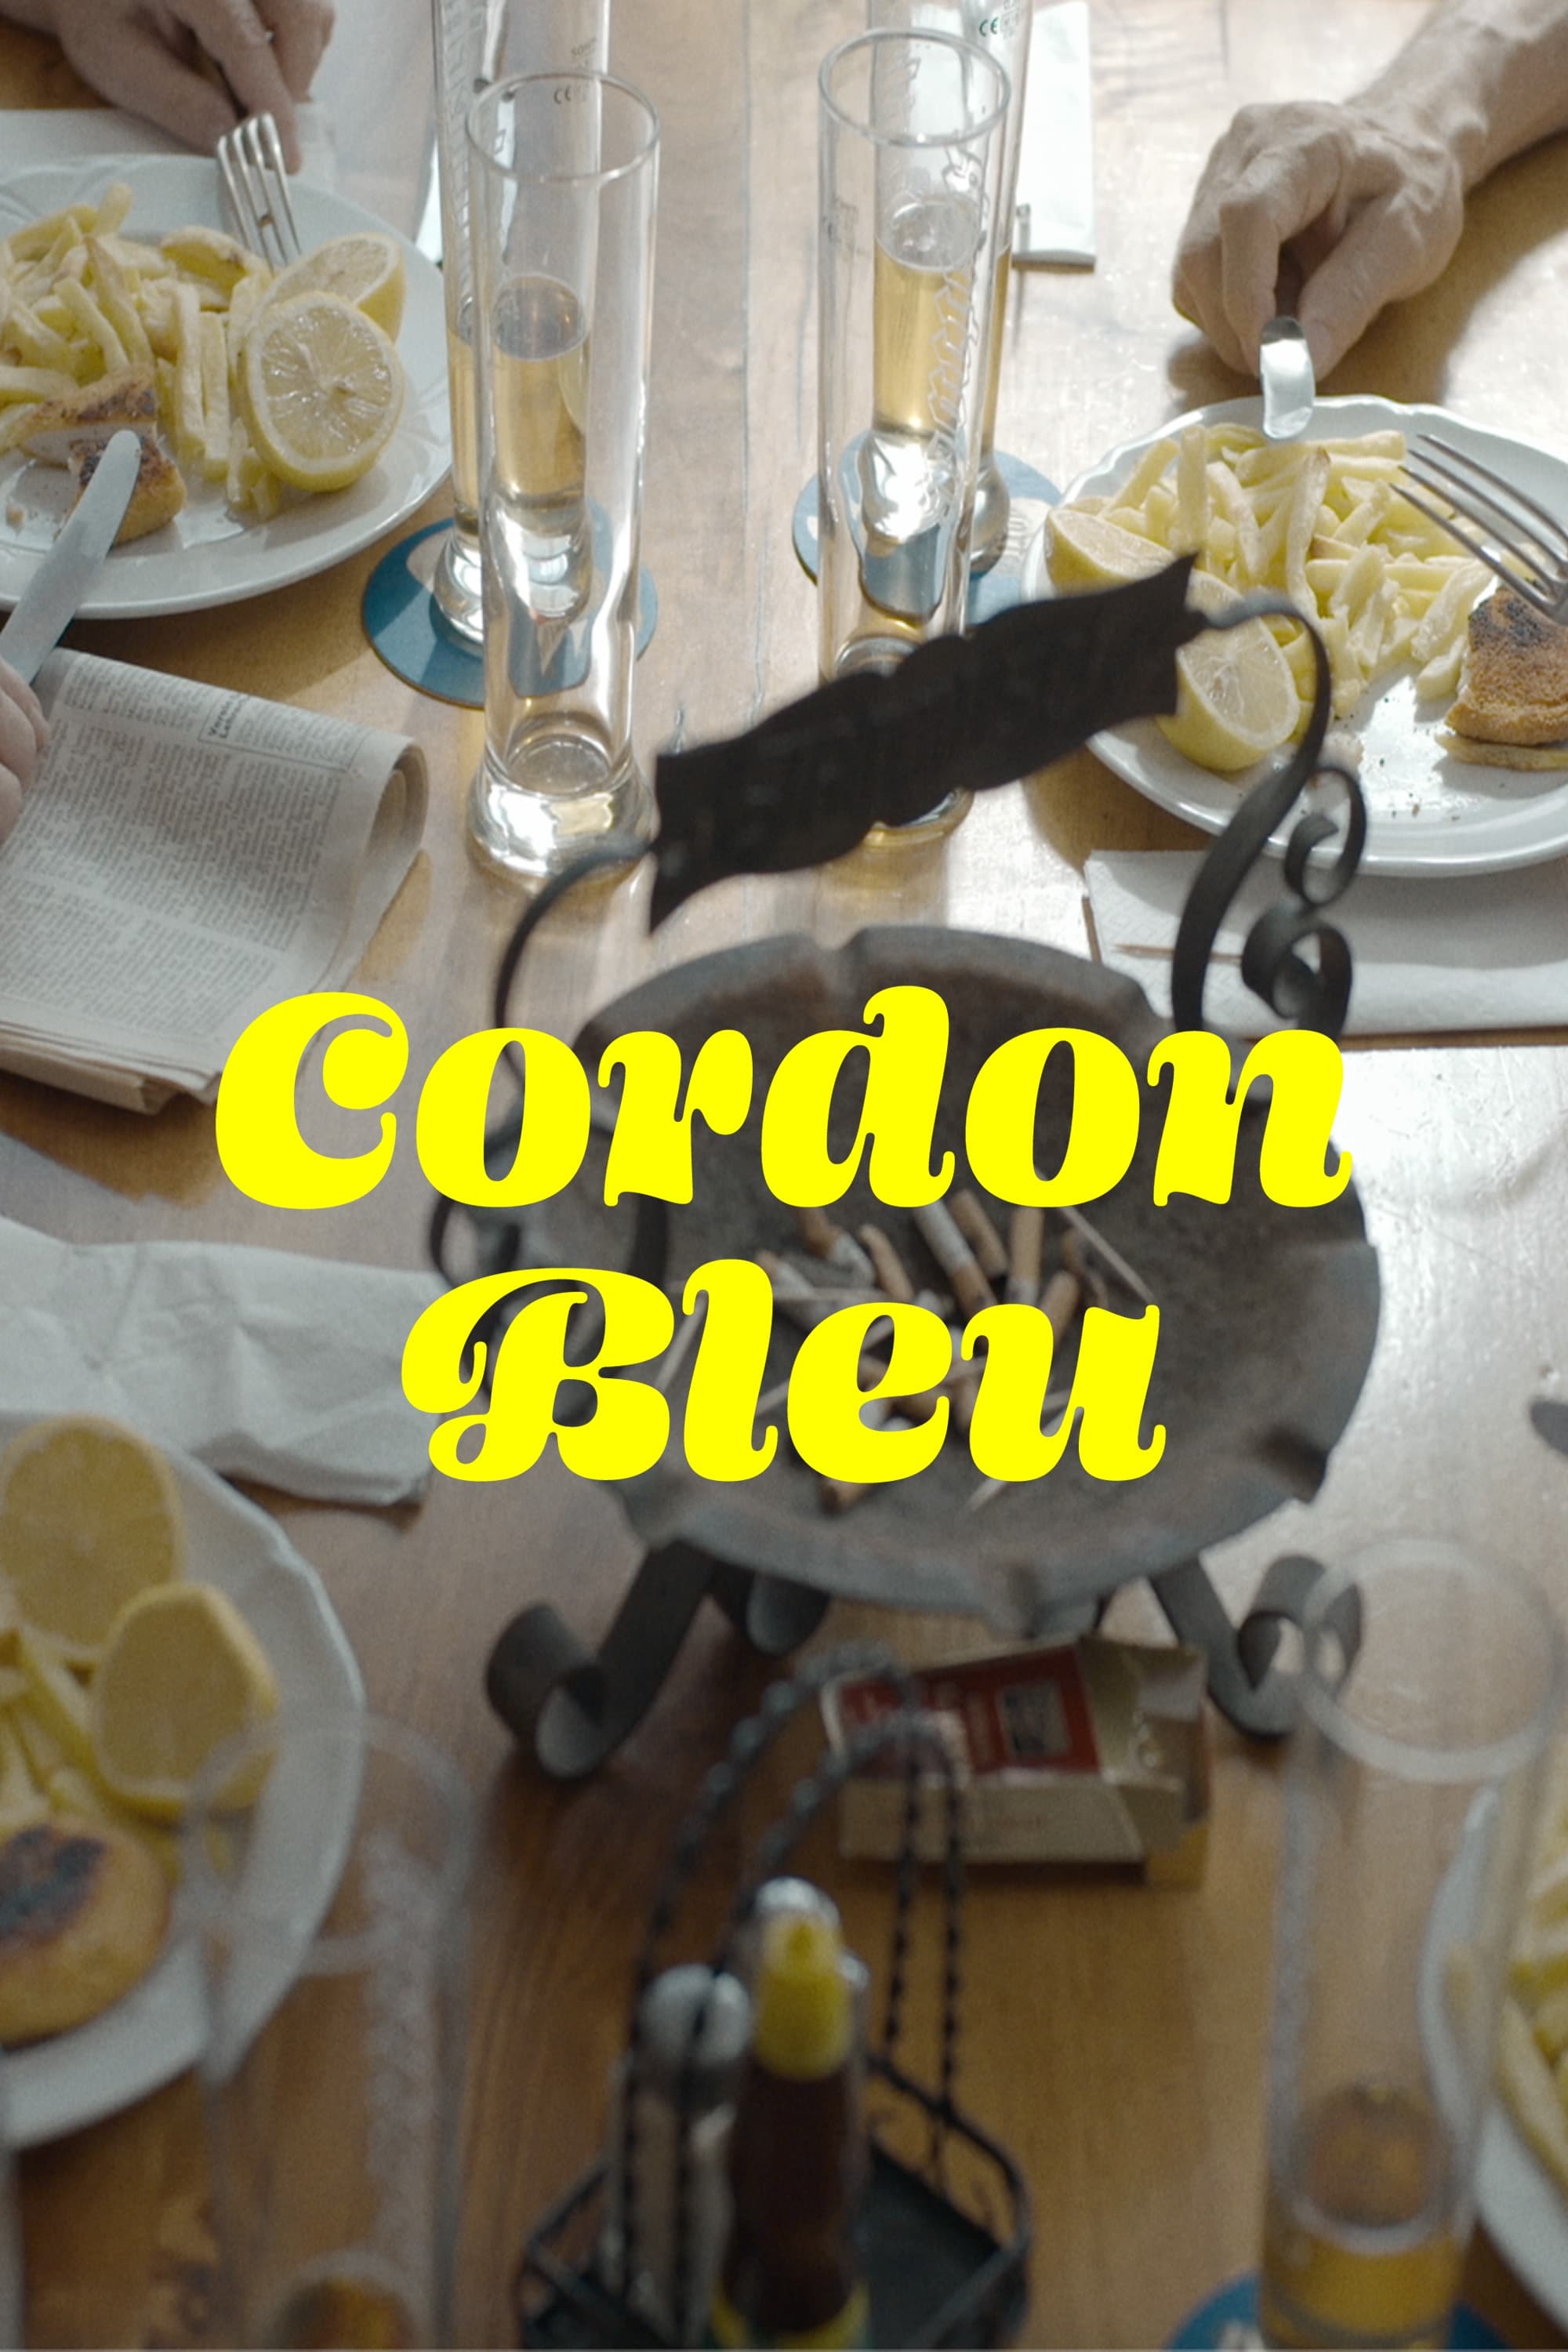 Cordon Bleu